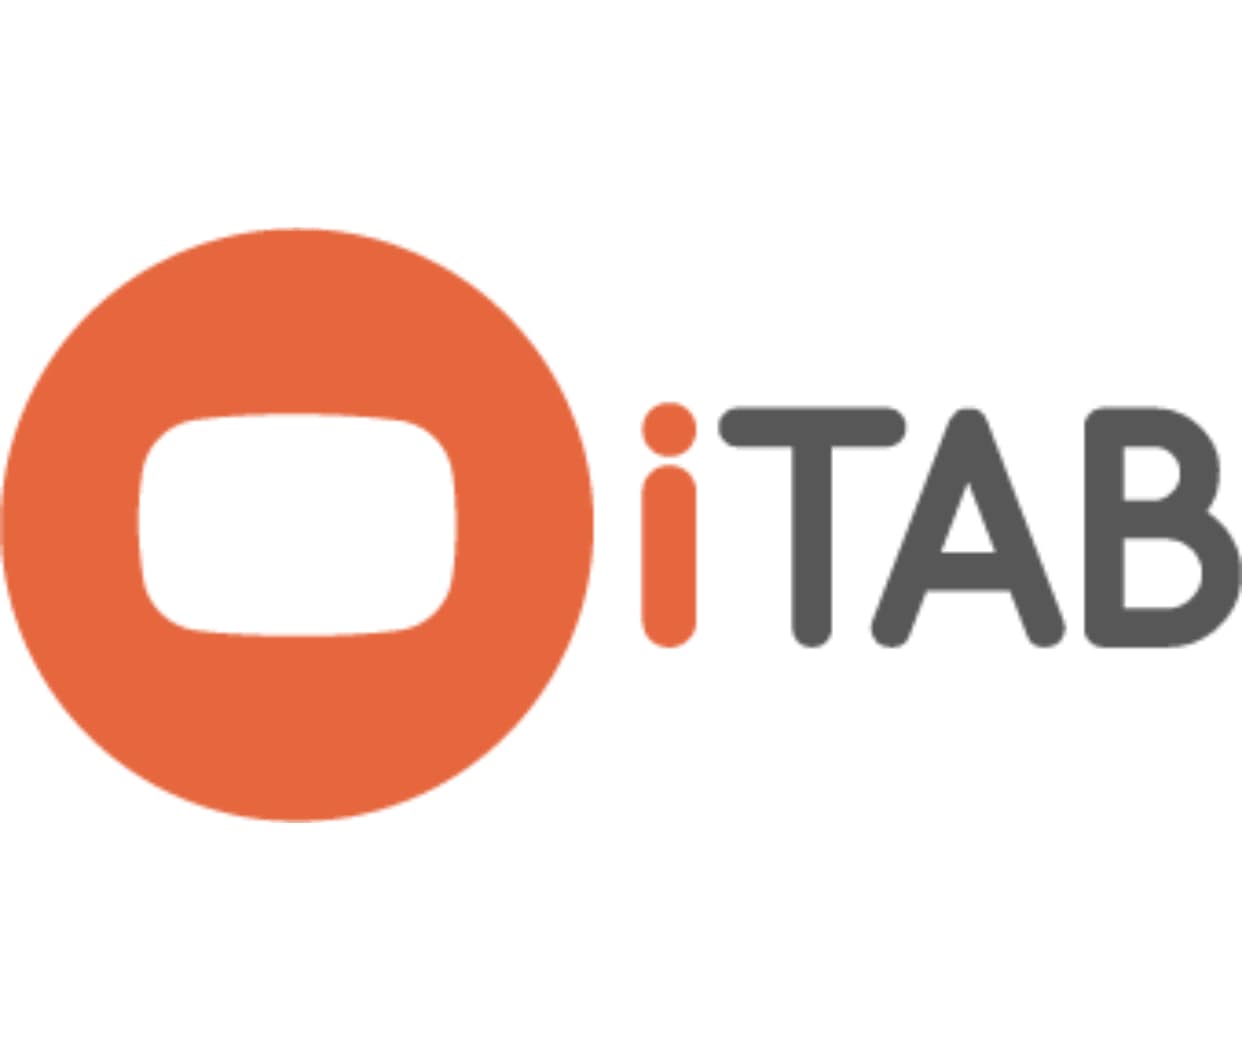 itab-logo-jpeg.jpg